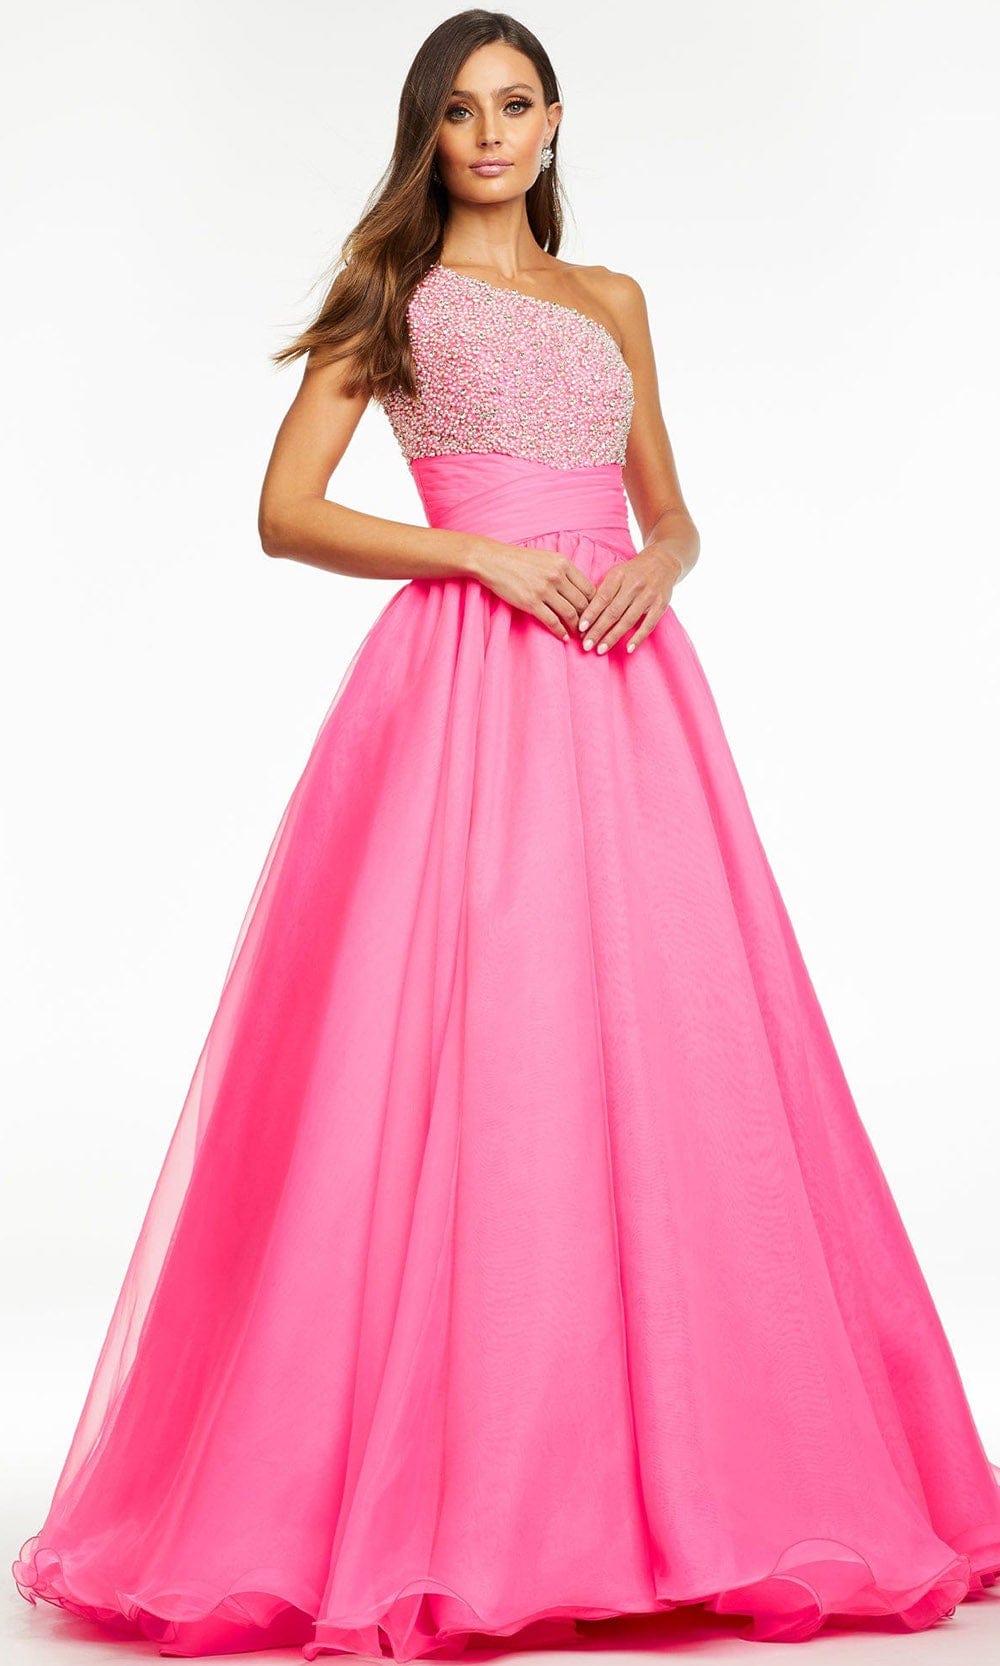 Ashley Lauren - 11127 Beaded Organza Ballgown Prom Dresses 0 / Hot Pink